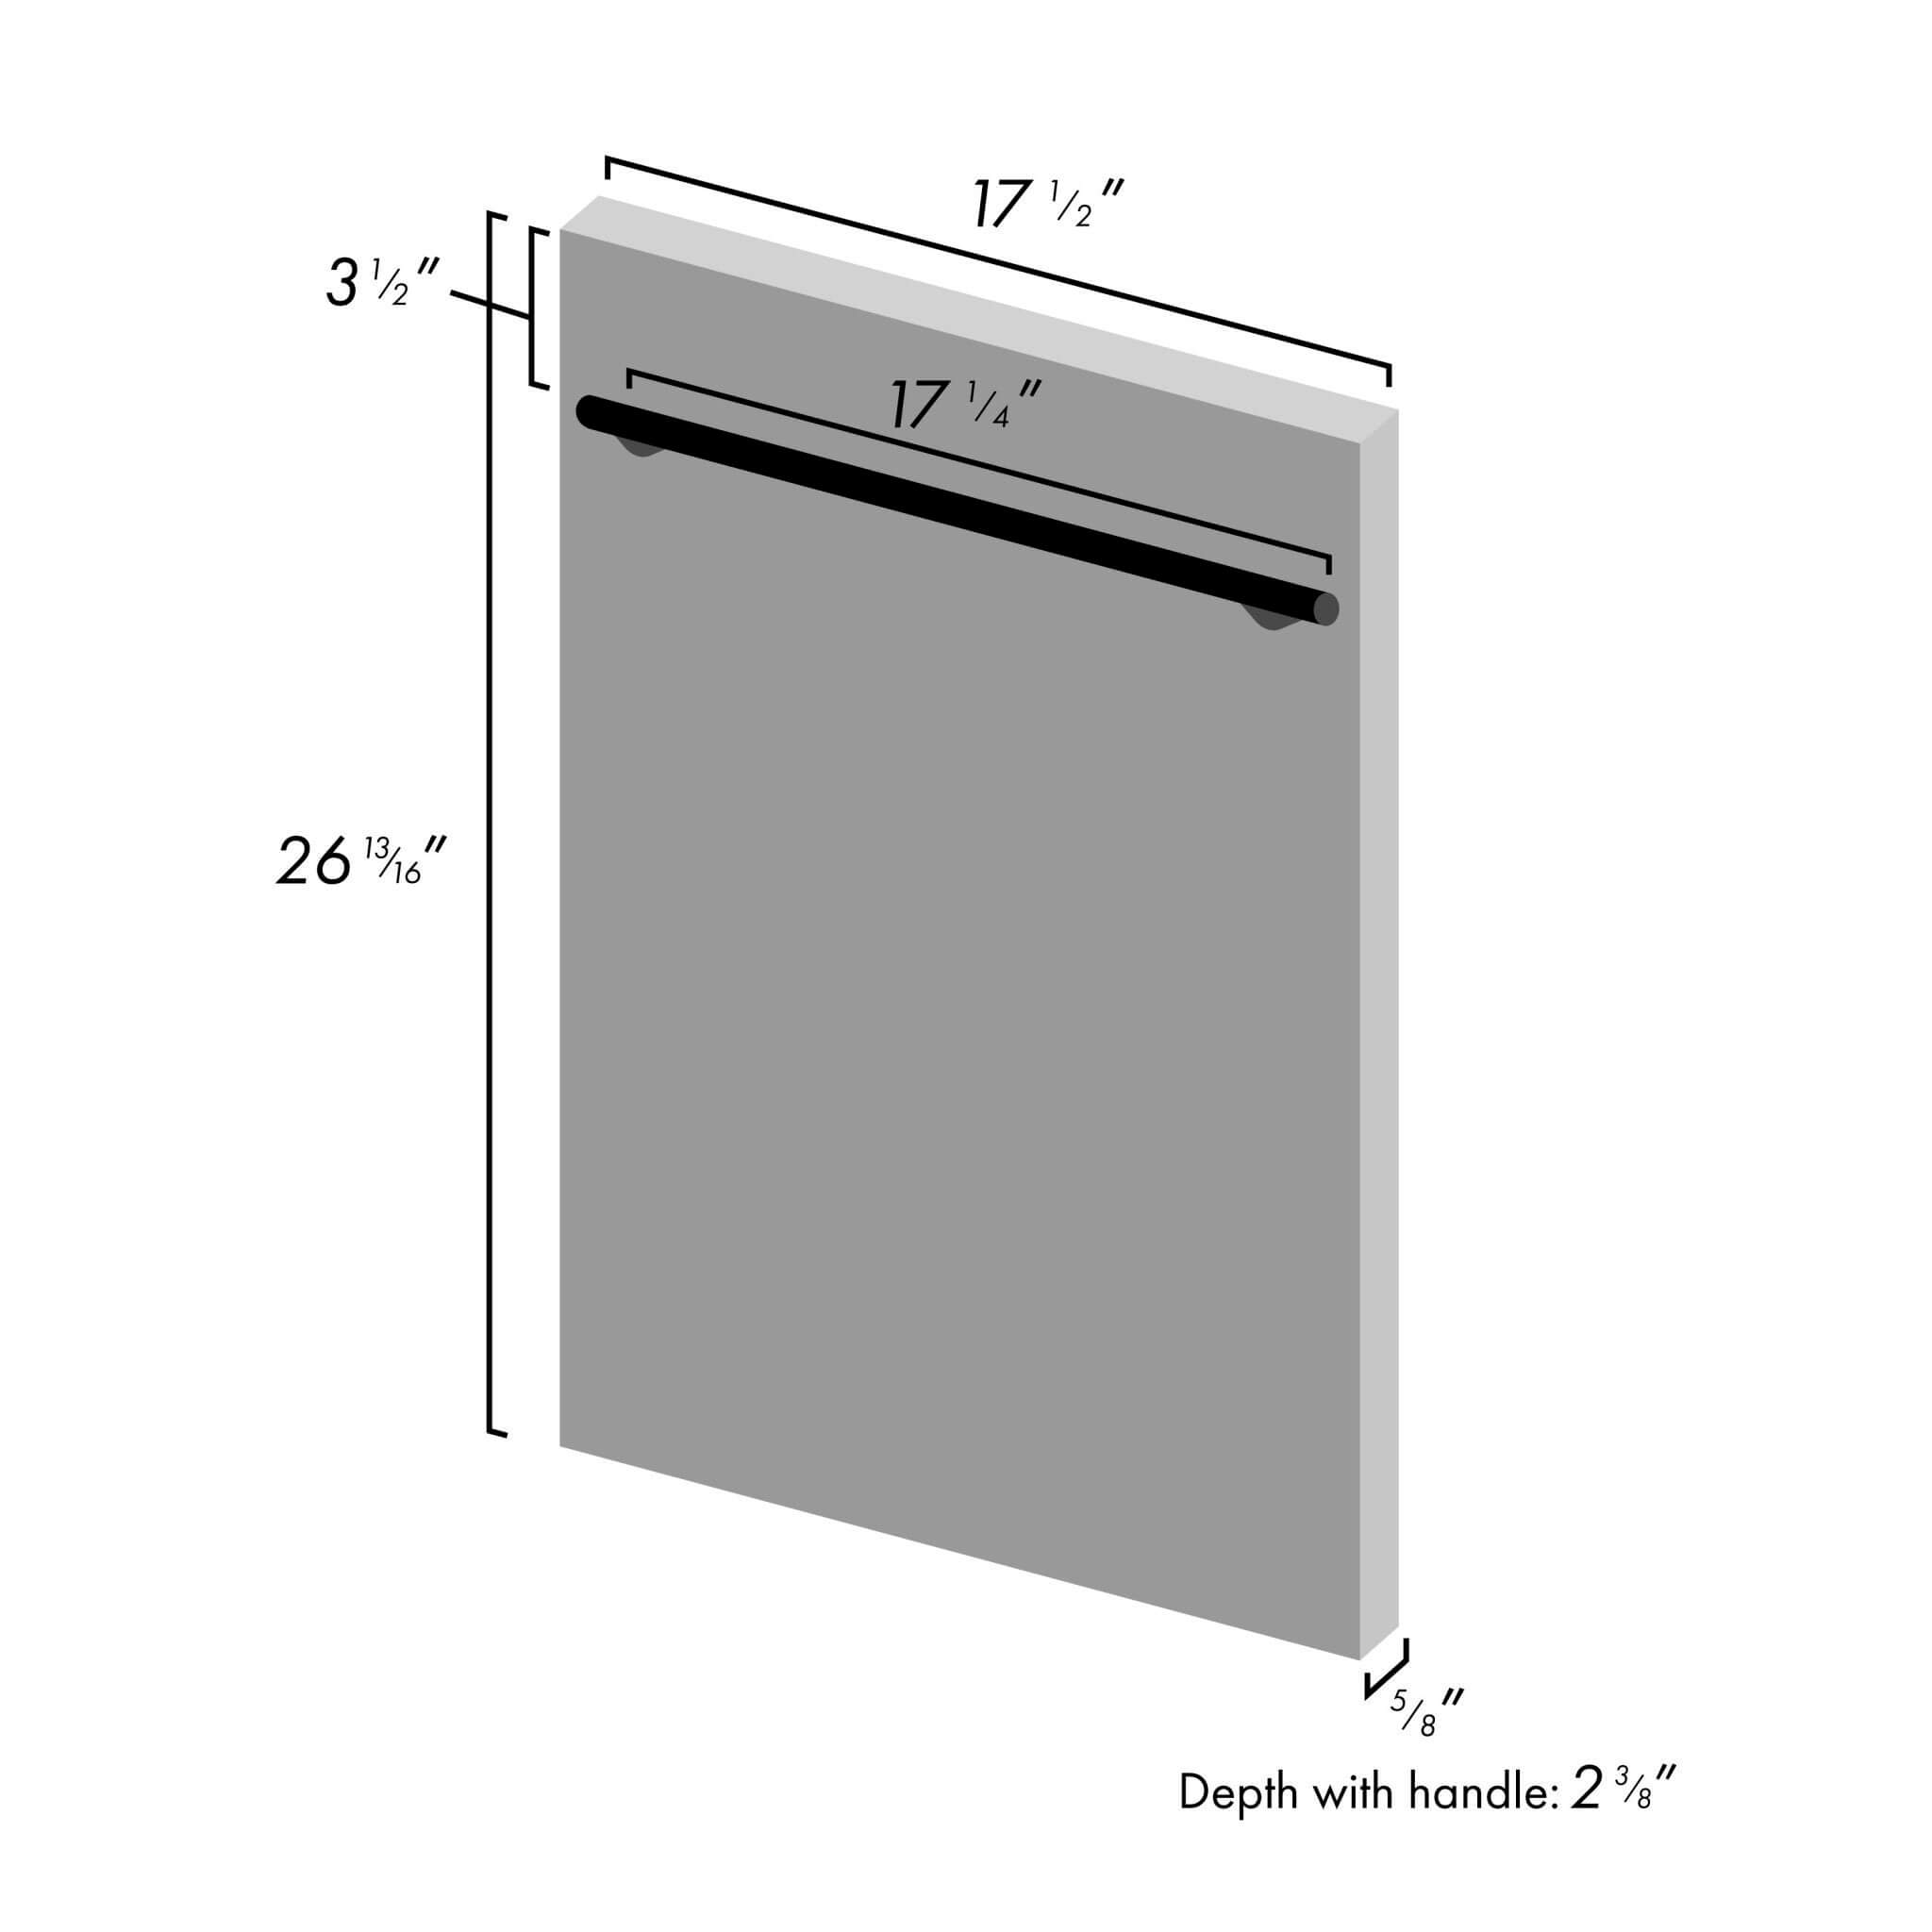 ZLINE 18 in. Dishwasher Panel with Modern Handle (DP-18) 